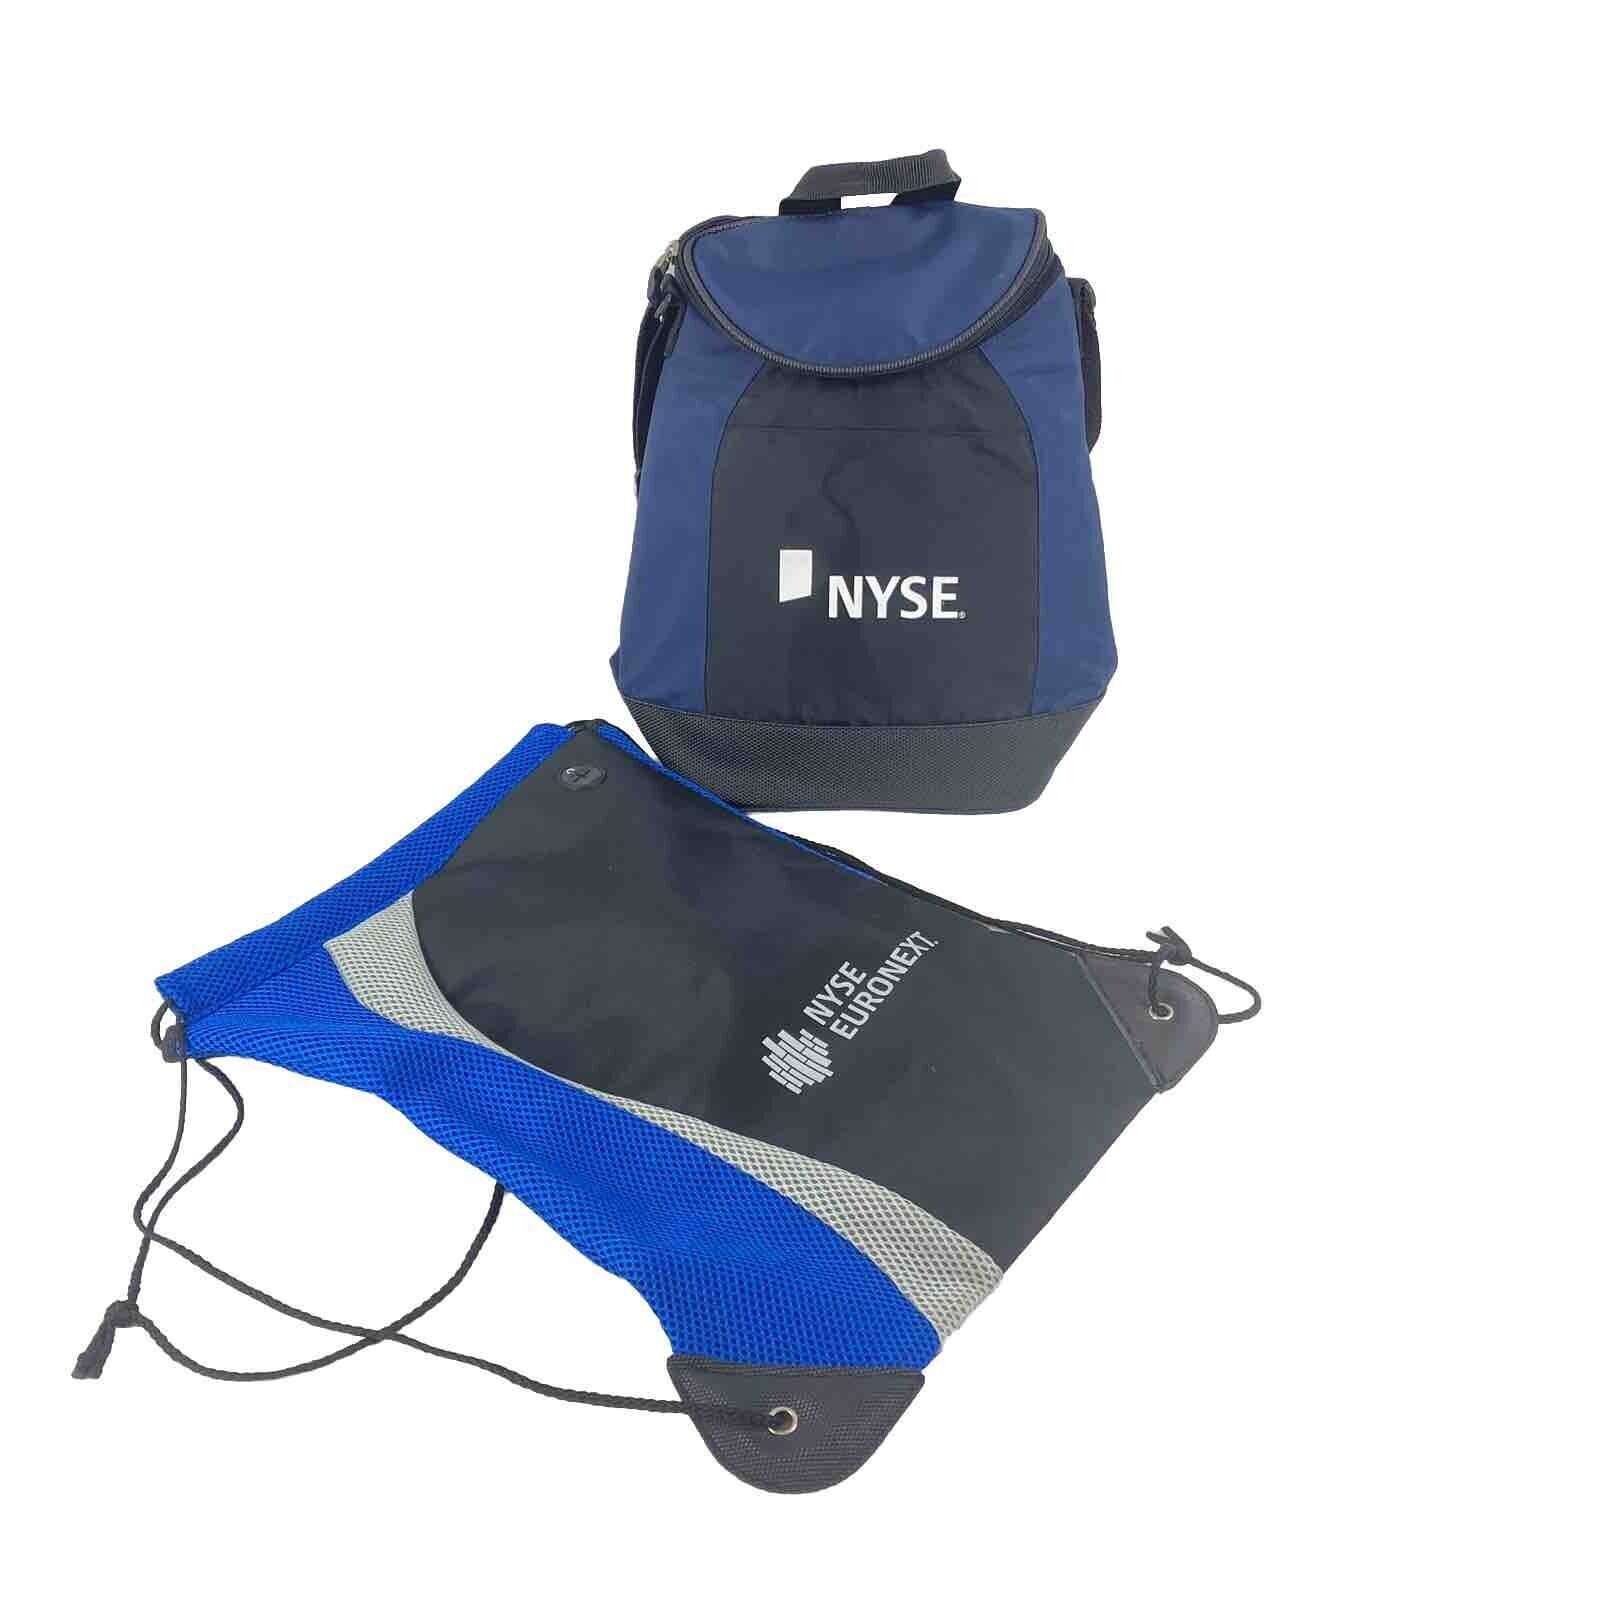 NYSE New York Stock Exchange Black Blue Mesh  Sling Bag and Picnic Cooler Bag